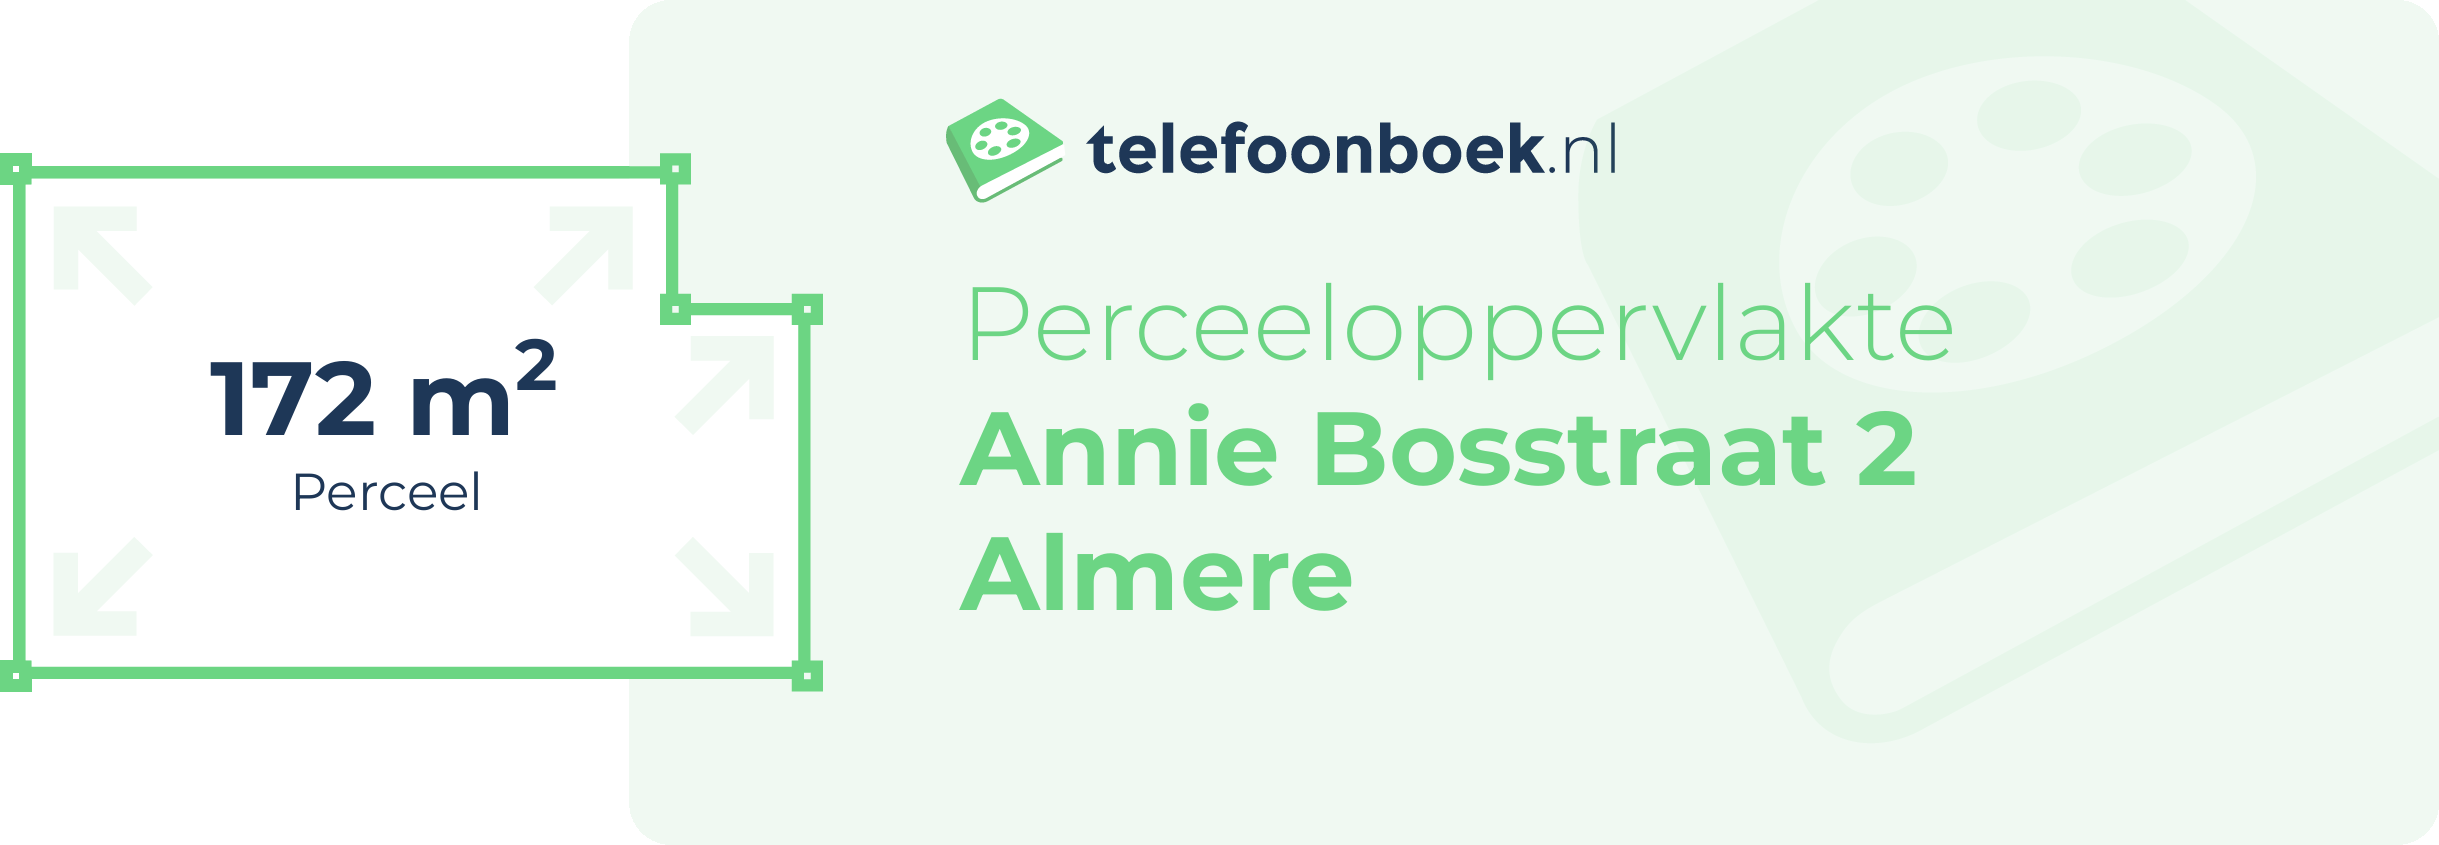 Perceeloppervlakte Annie Bosstraat 2 Almere